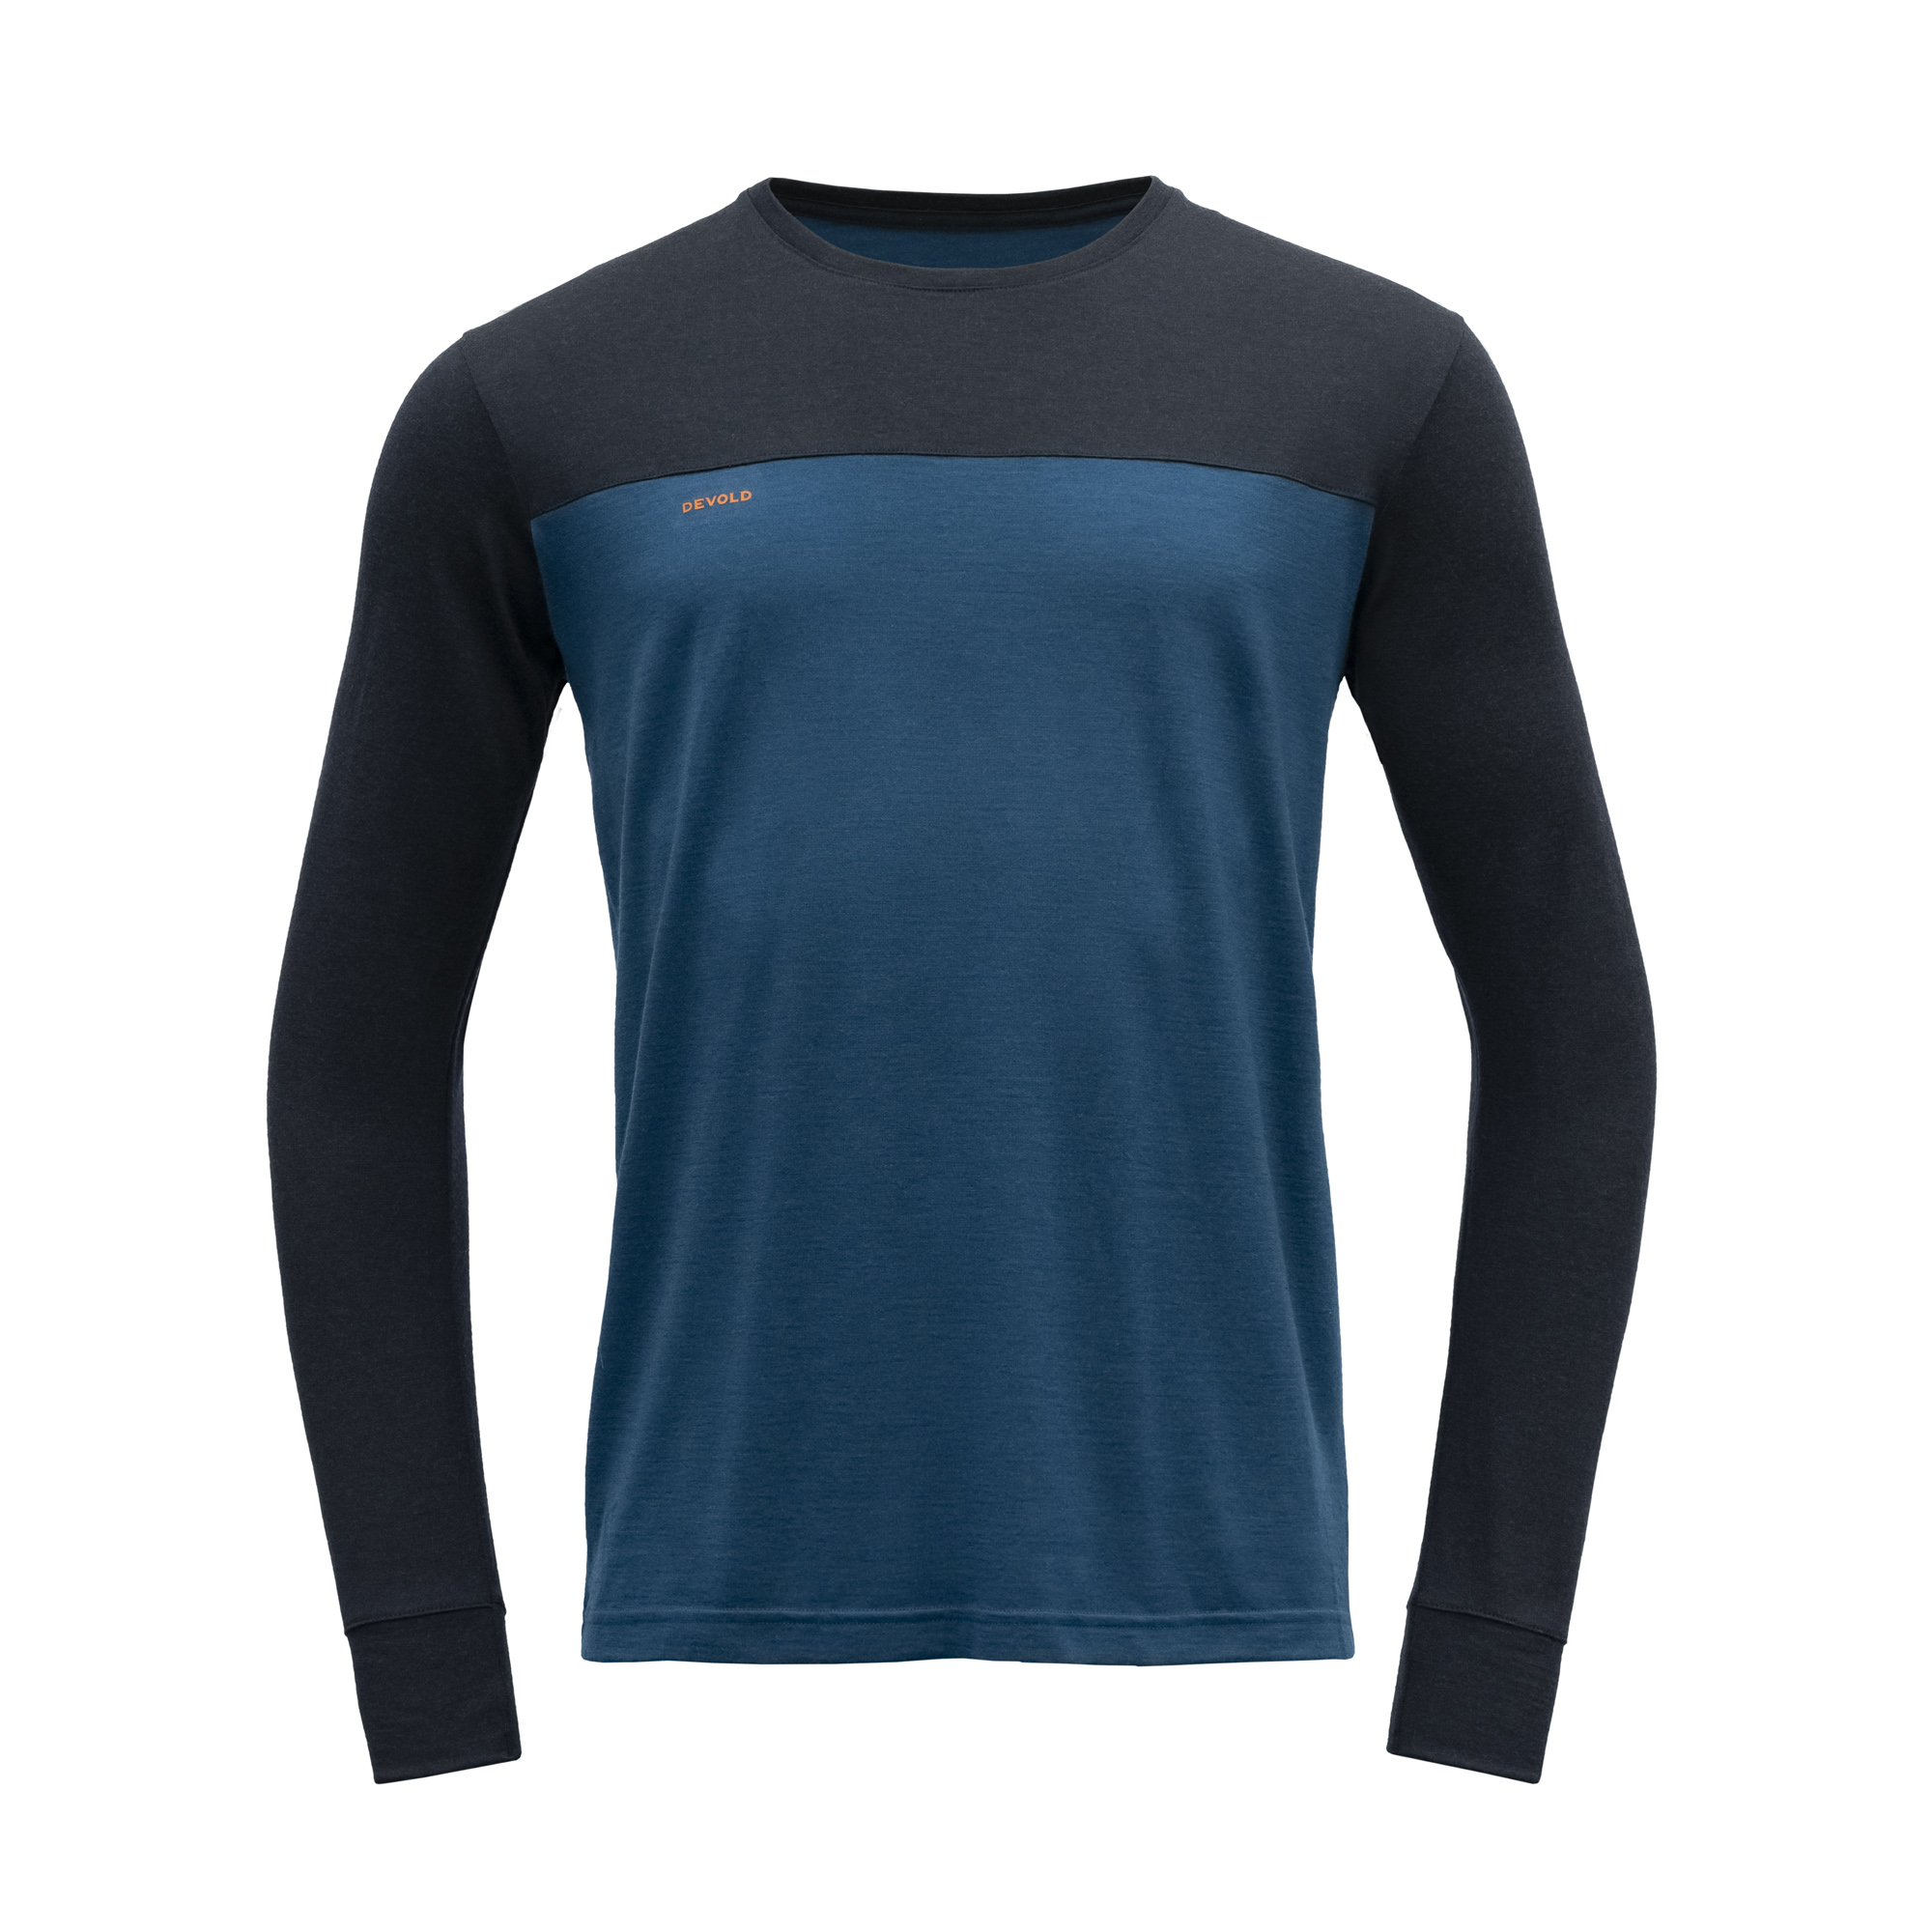 Devold pánské triko s dlouhým rukávem Norang Man Shirt Barva: Ink/Flood, Velikost: XL